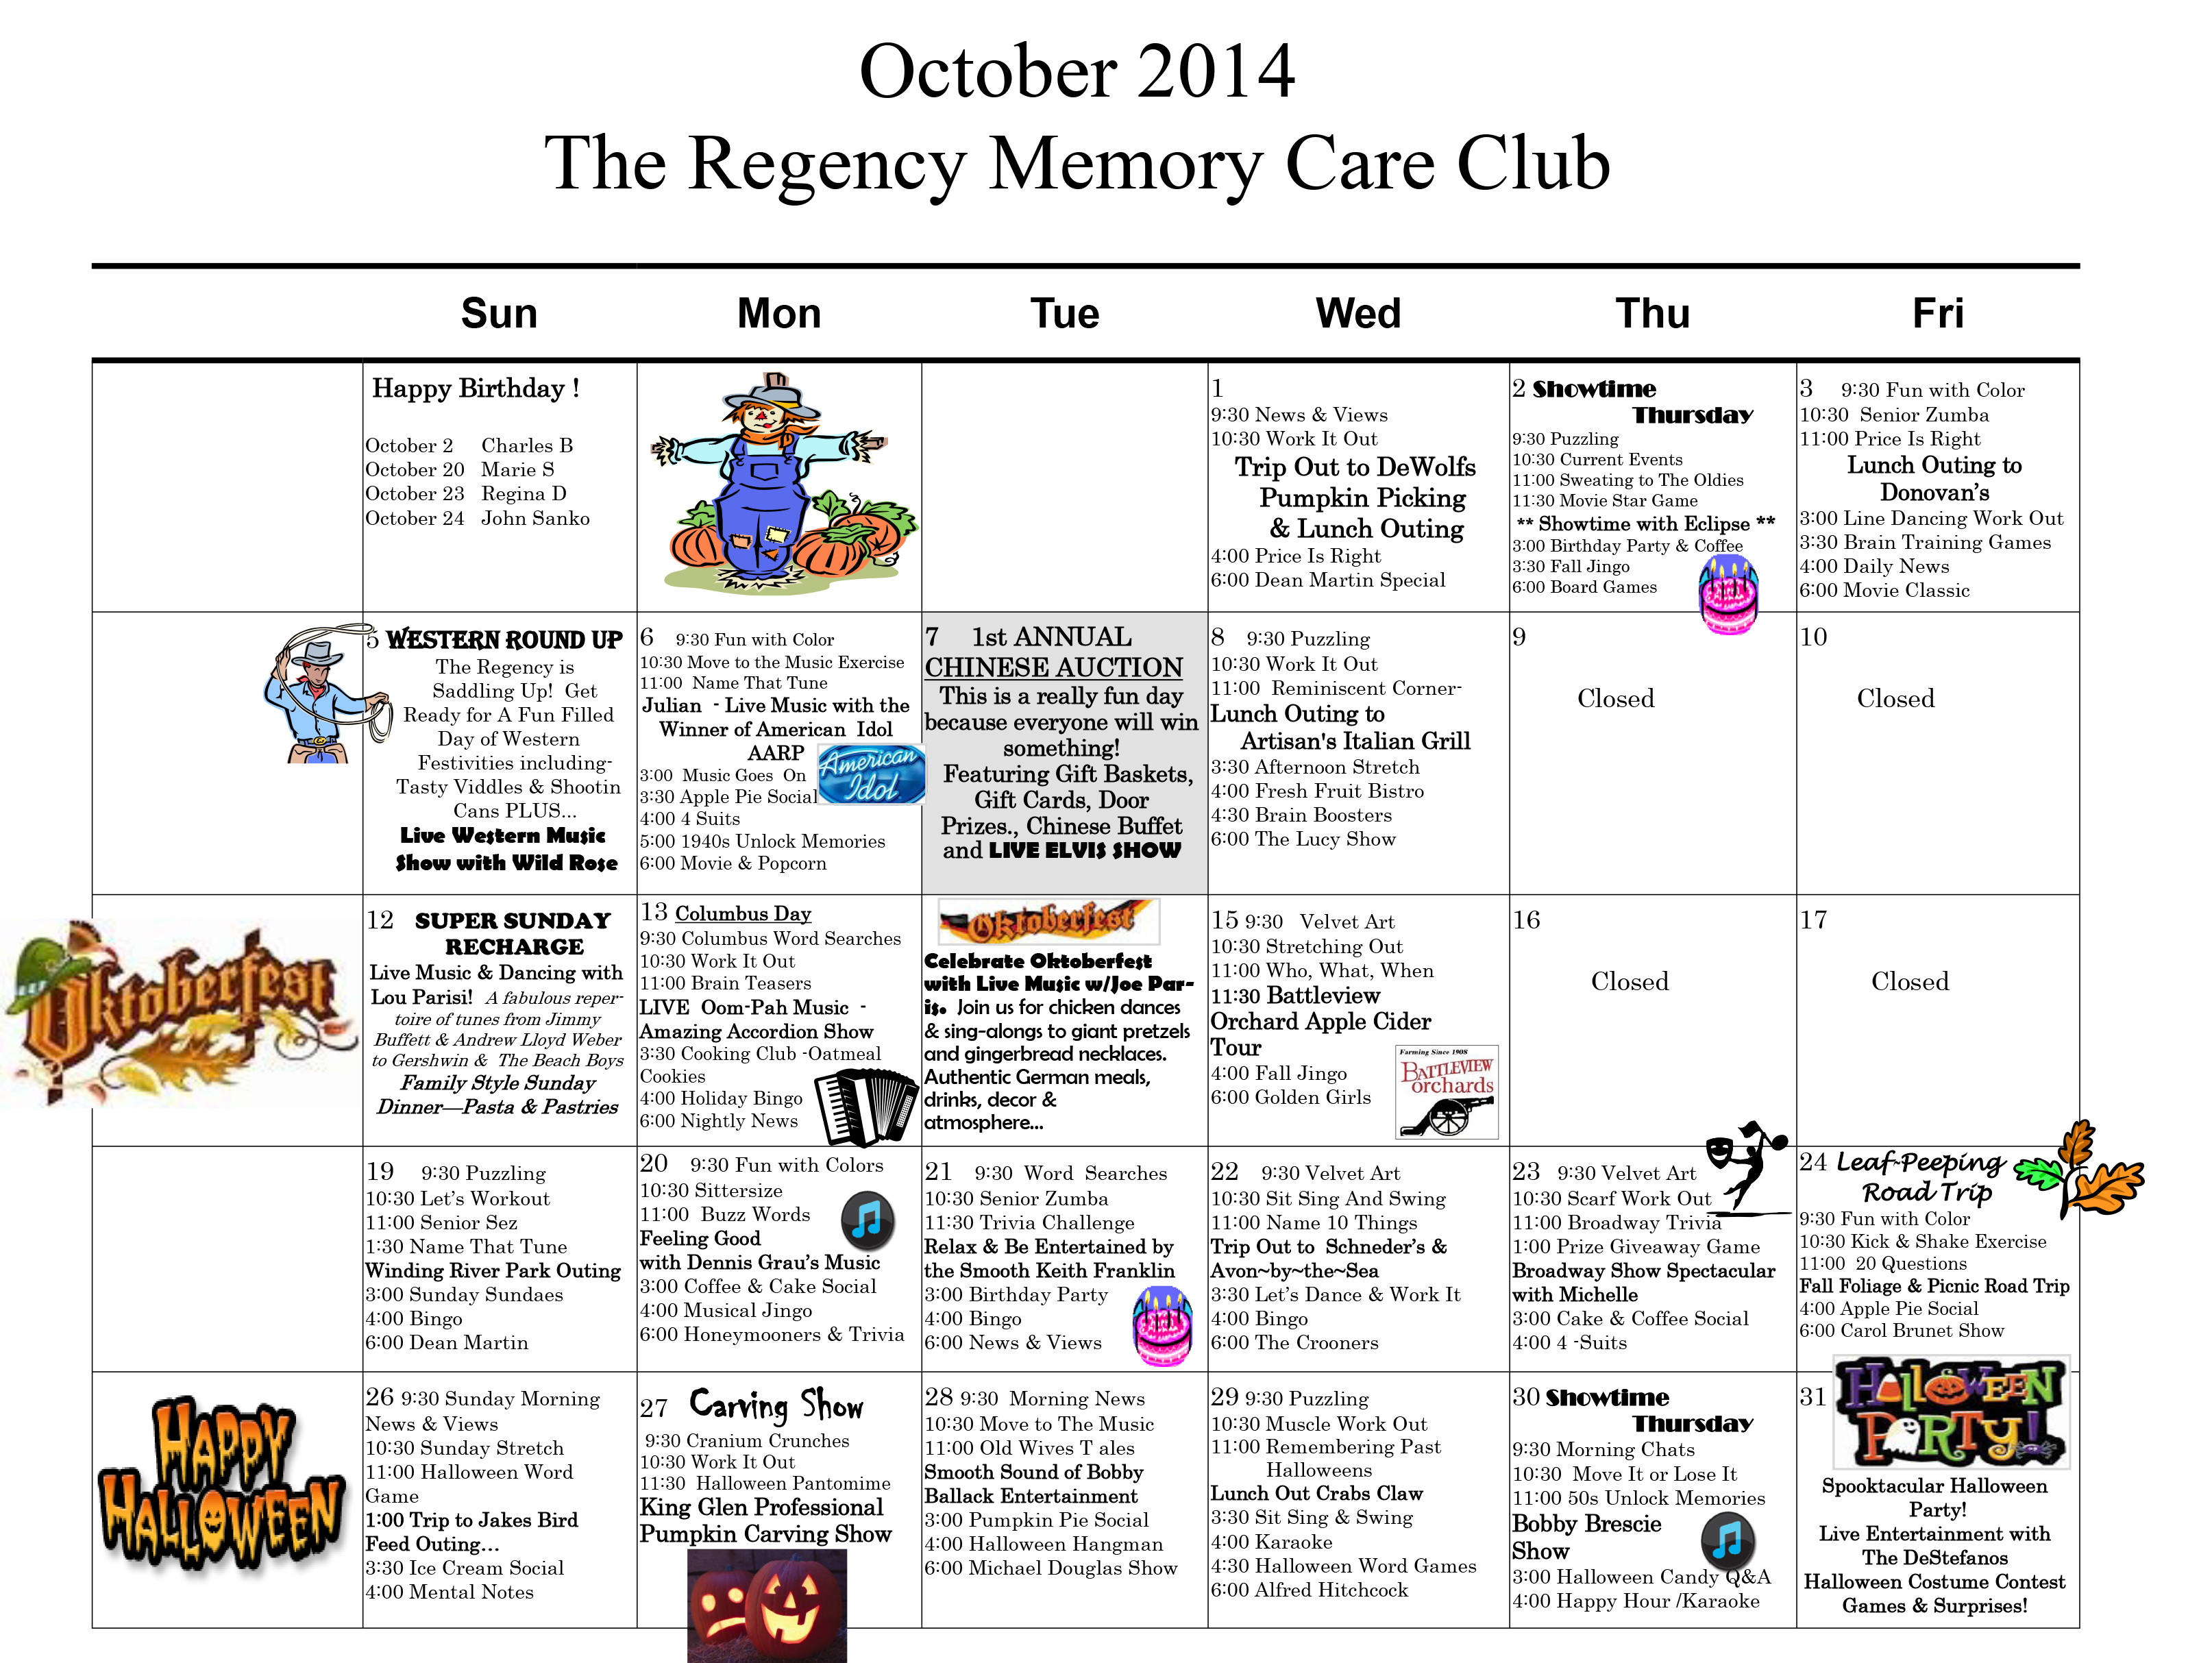 October 2014 Events